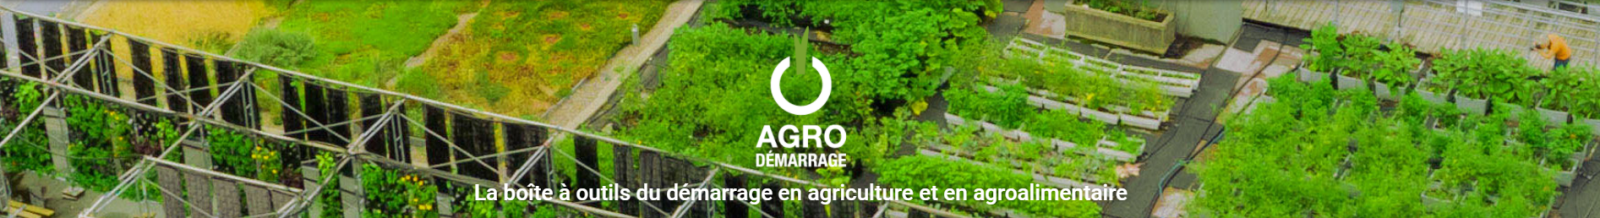 Agro-démarrage - URBAIN